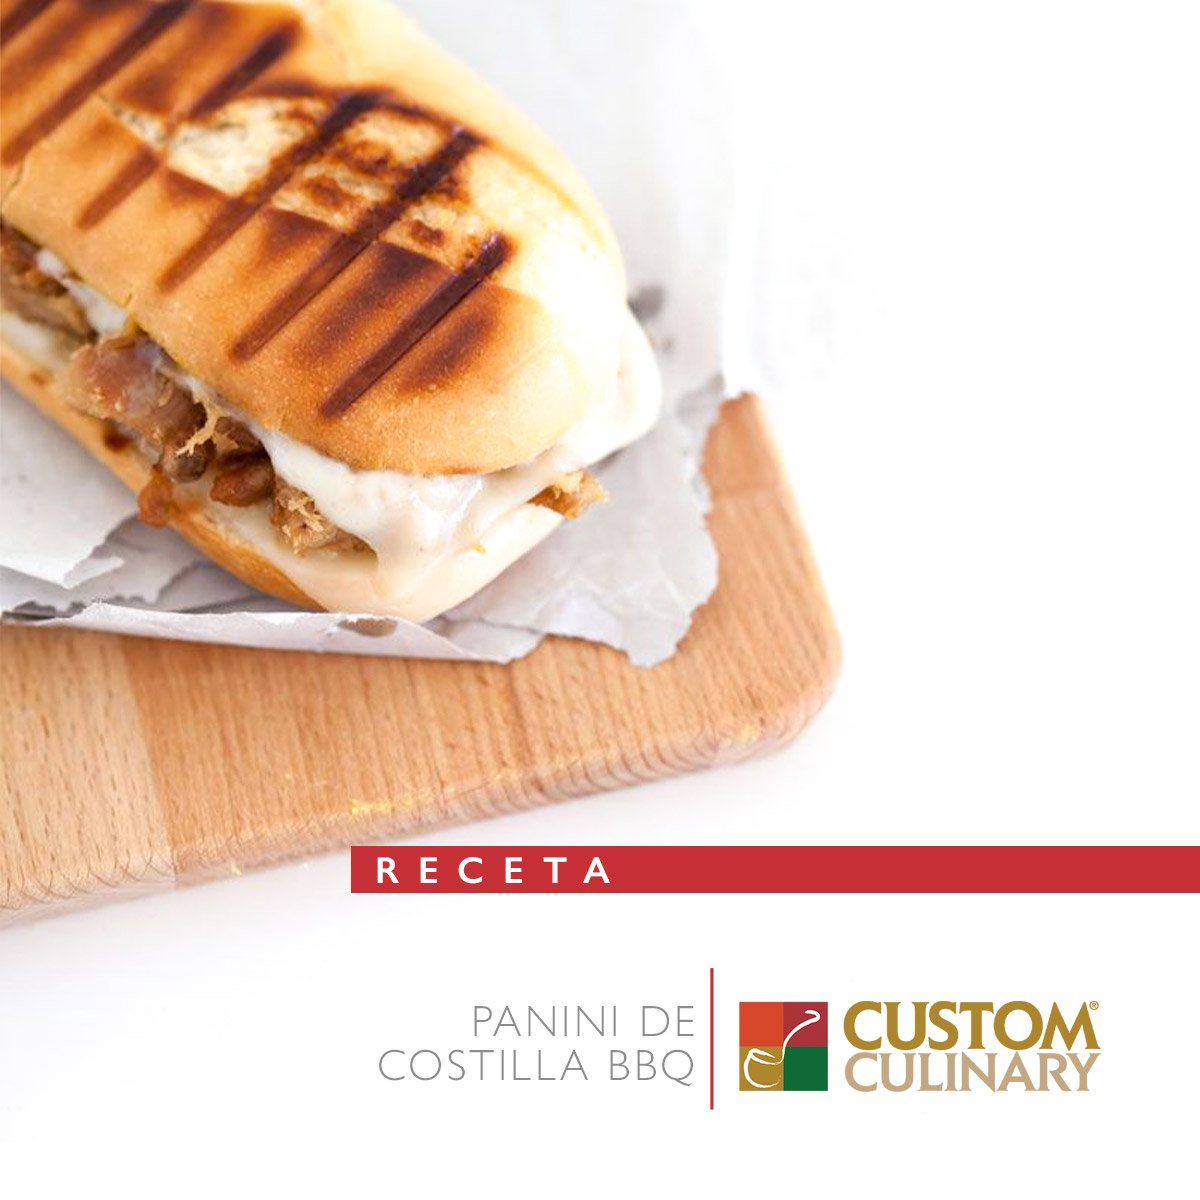 PANINI DE COSTILLA BBQ - Custom Culinary México